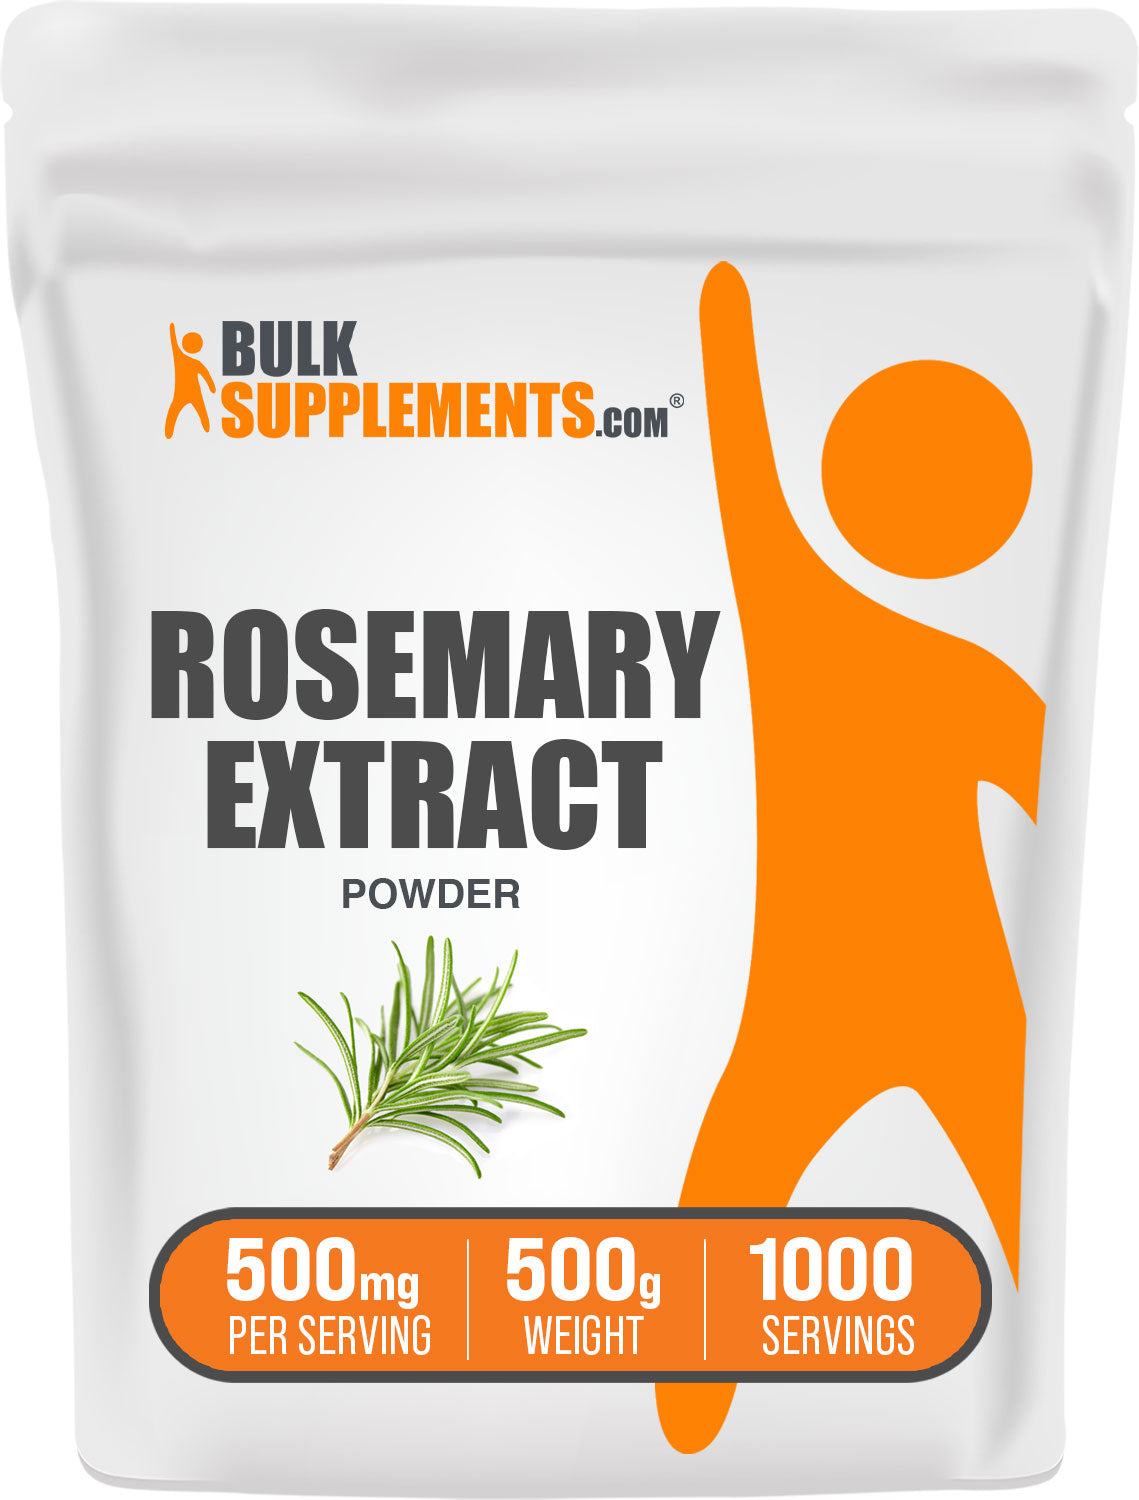 BulkSupplements.com Rosemary Extract Powder 500g Bag